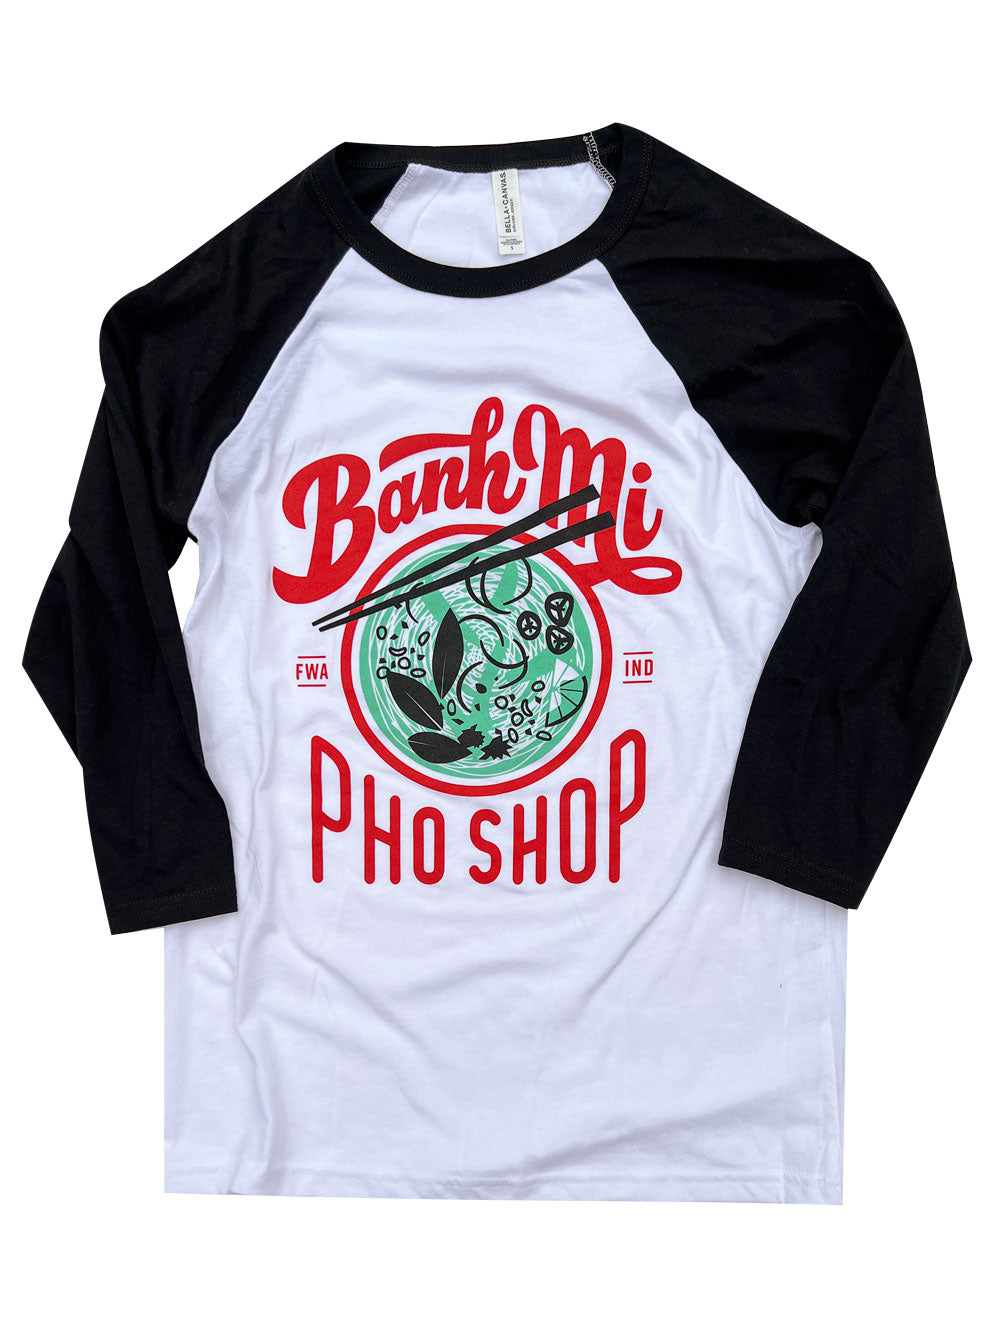 Banh Mi Pho Shop black and white baseball shirt